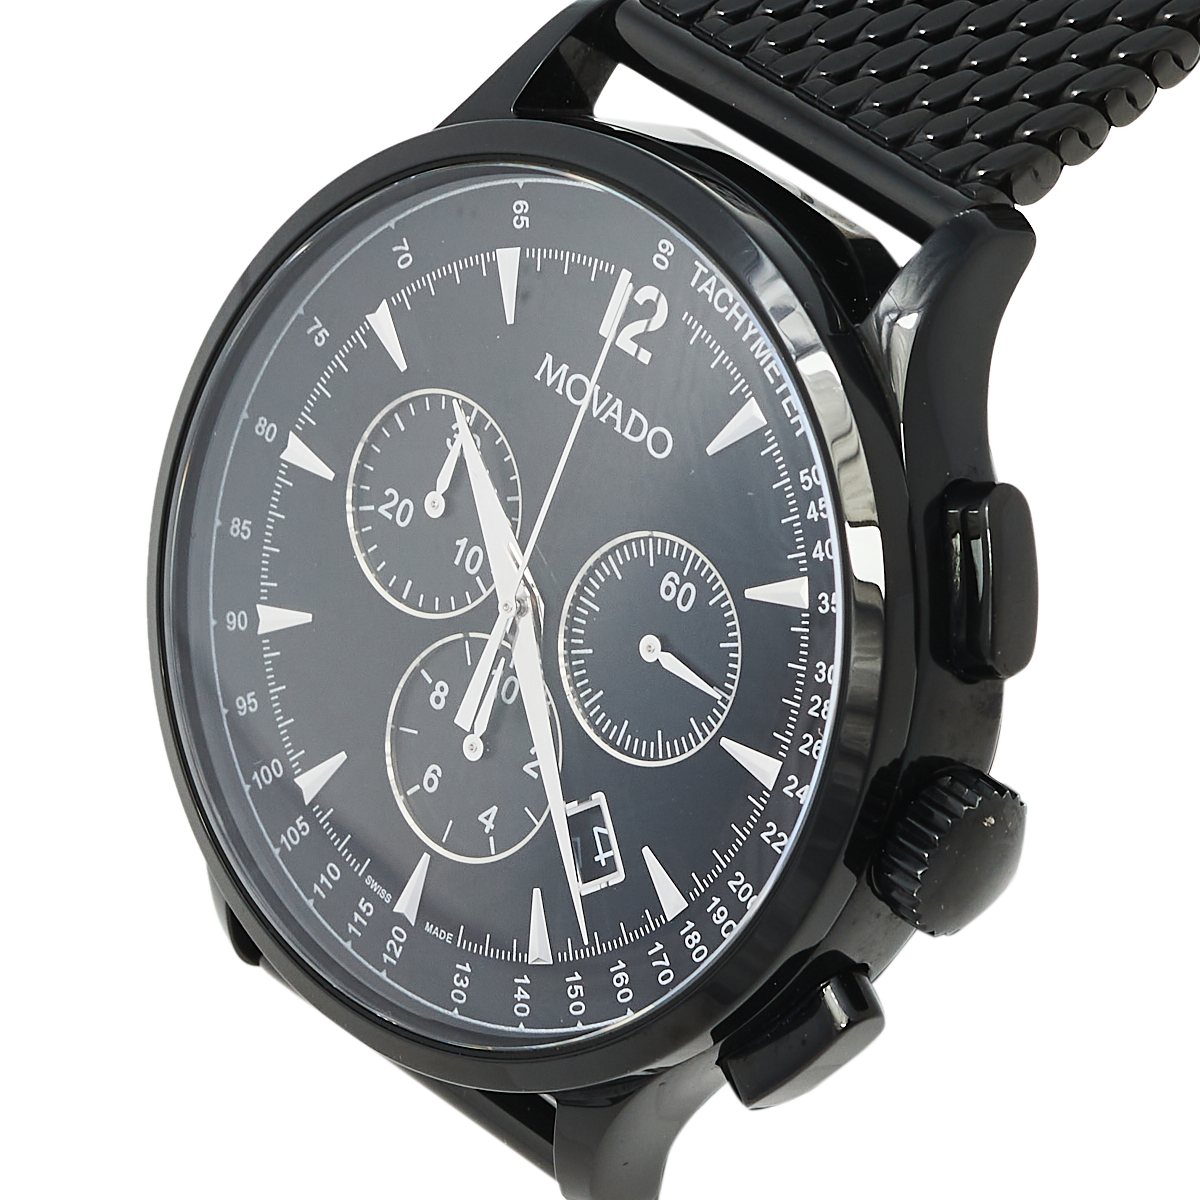 

Movado Black PVD Stainless Steel Circa MO.35.1.36.1241 Men's Wristwatch